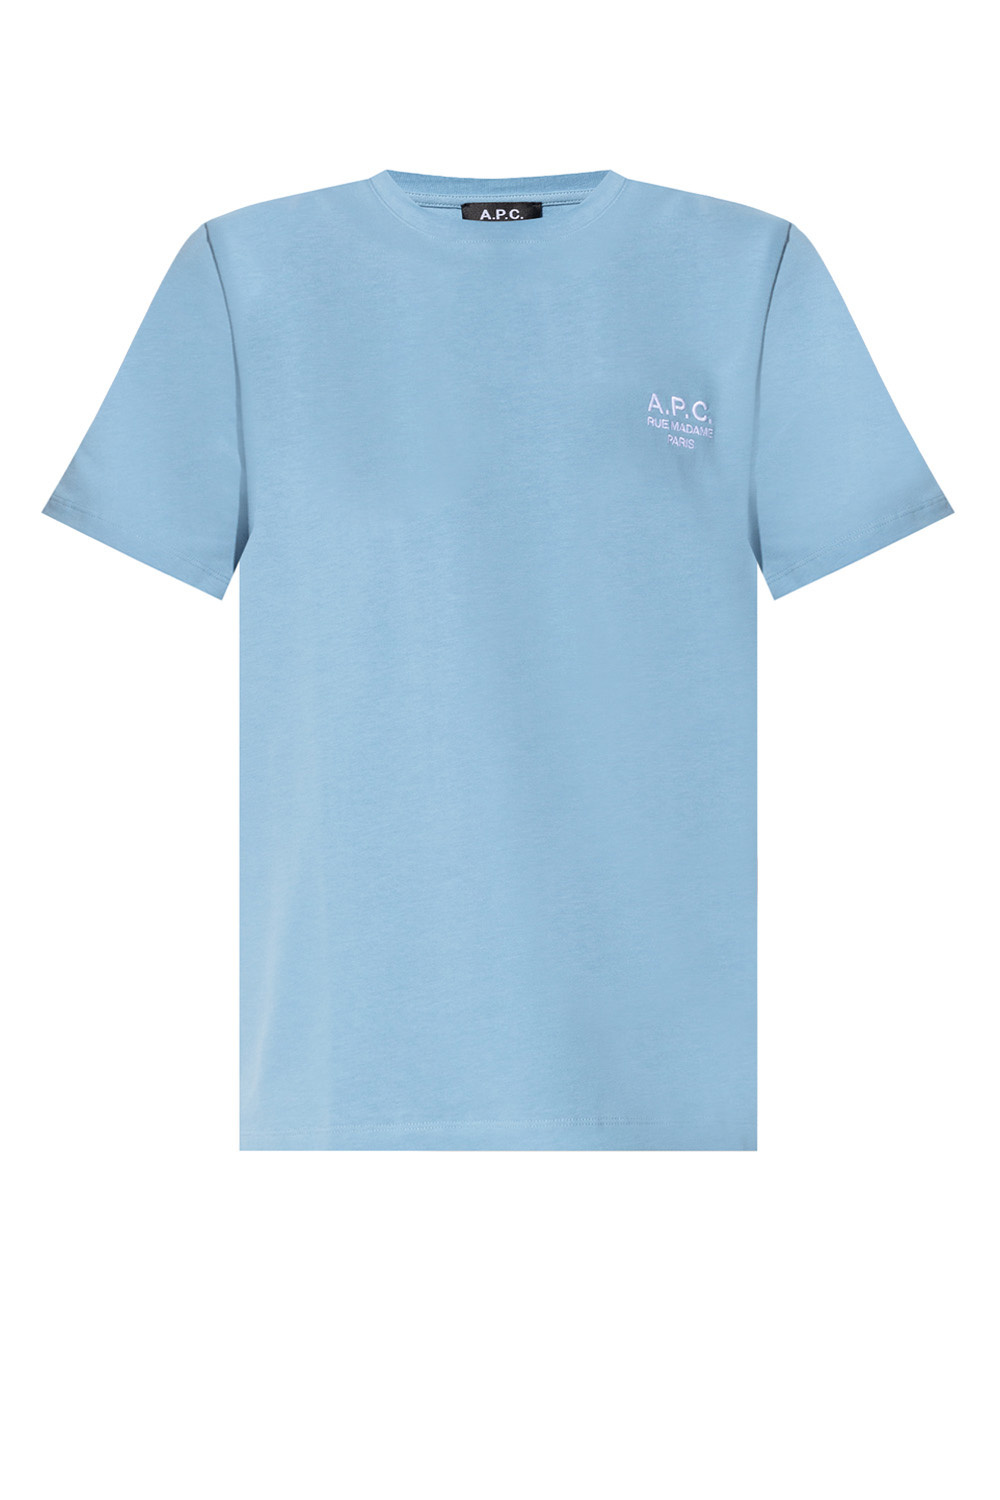 embroidered T - IetpShops shirt Logo - Blood - Svart med dragkedja Brother i Stoke A.P.C. GB Blue sweatshirt halsen 